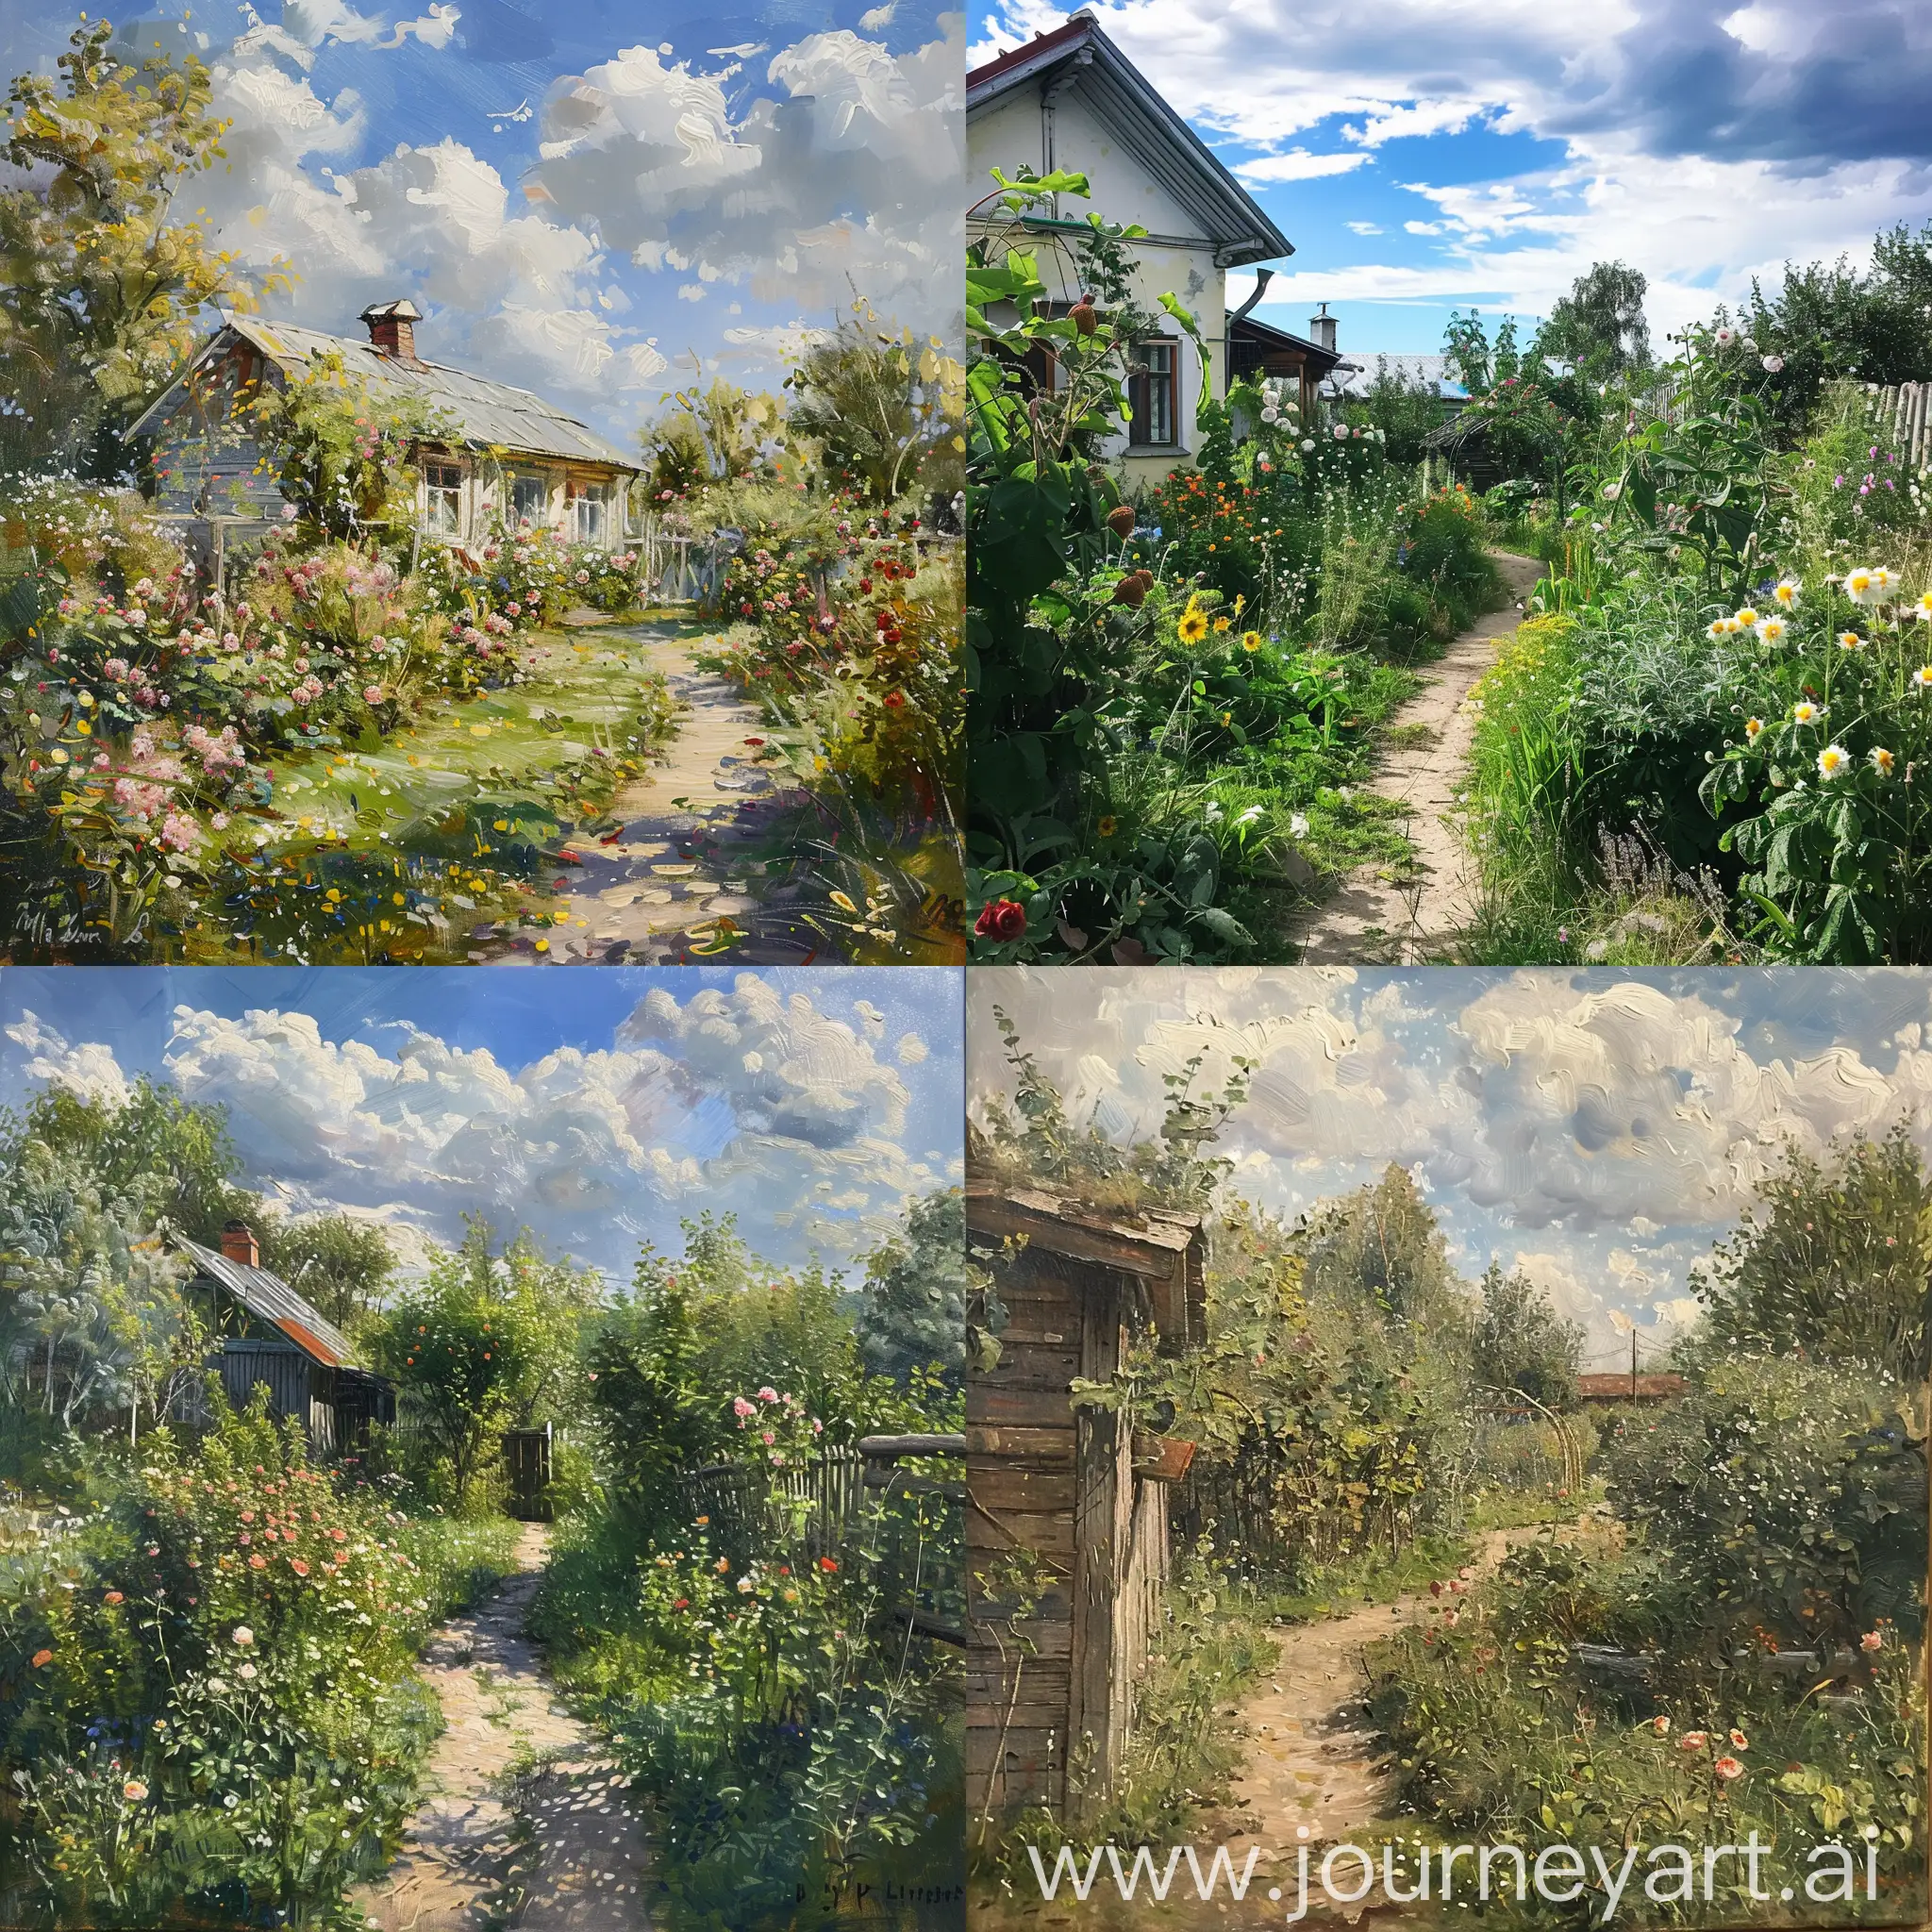 Scenic-Dacha-Cottage-Garden-Path-Under-Blue-Sky